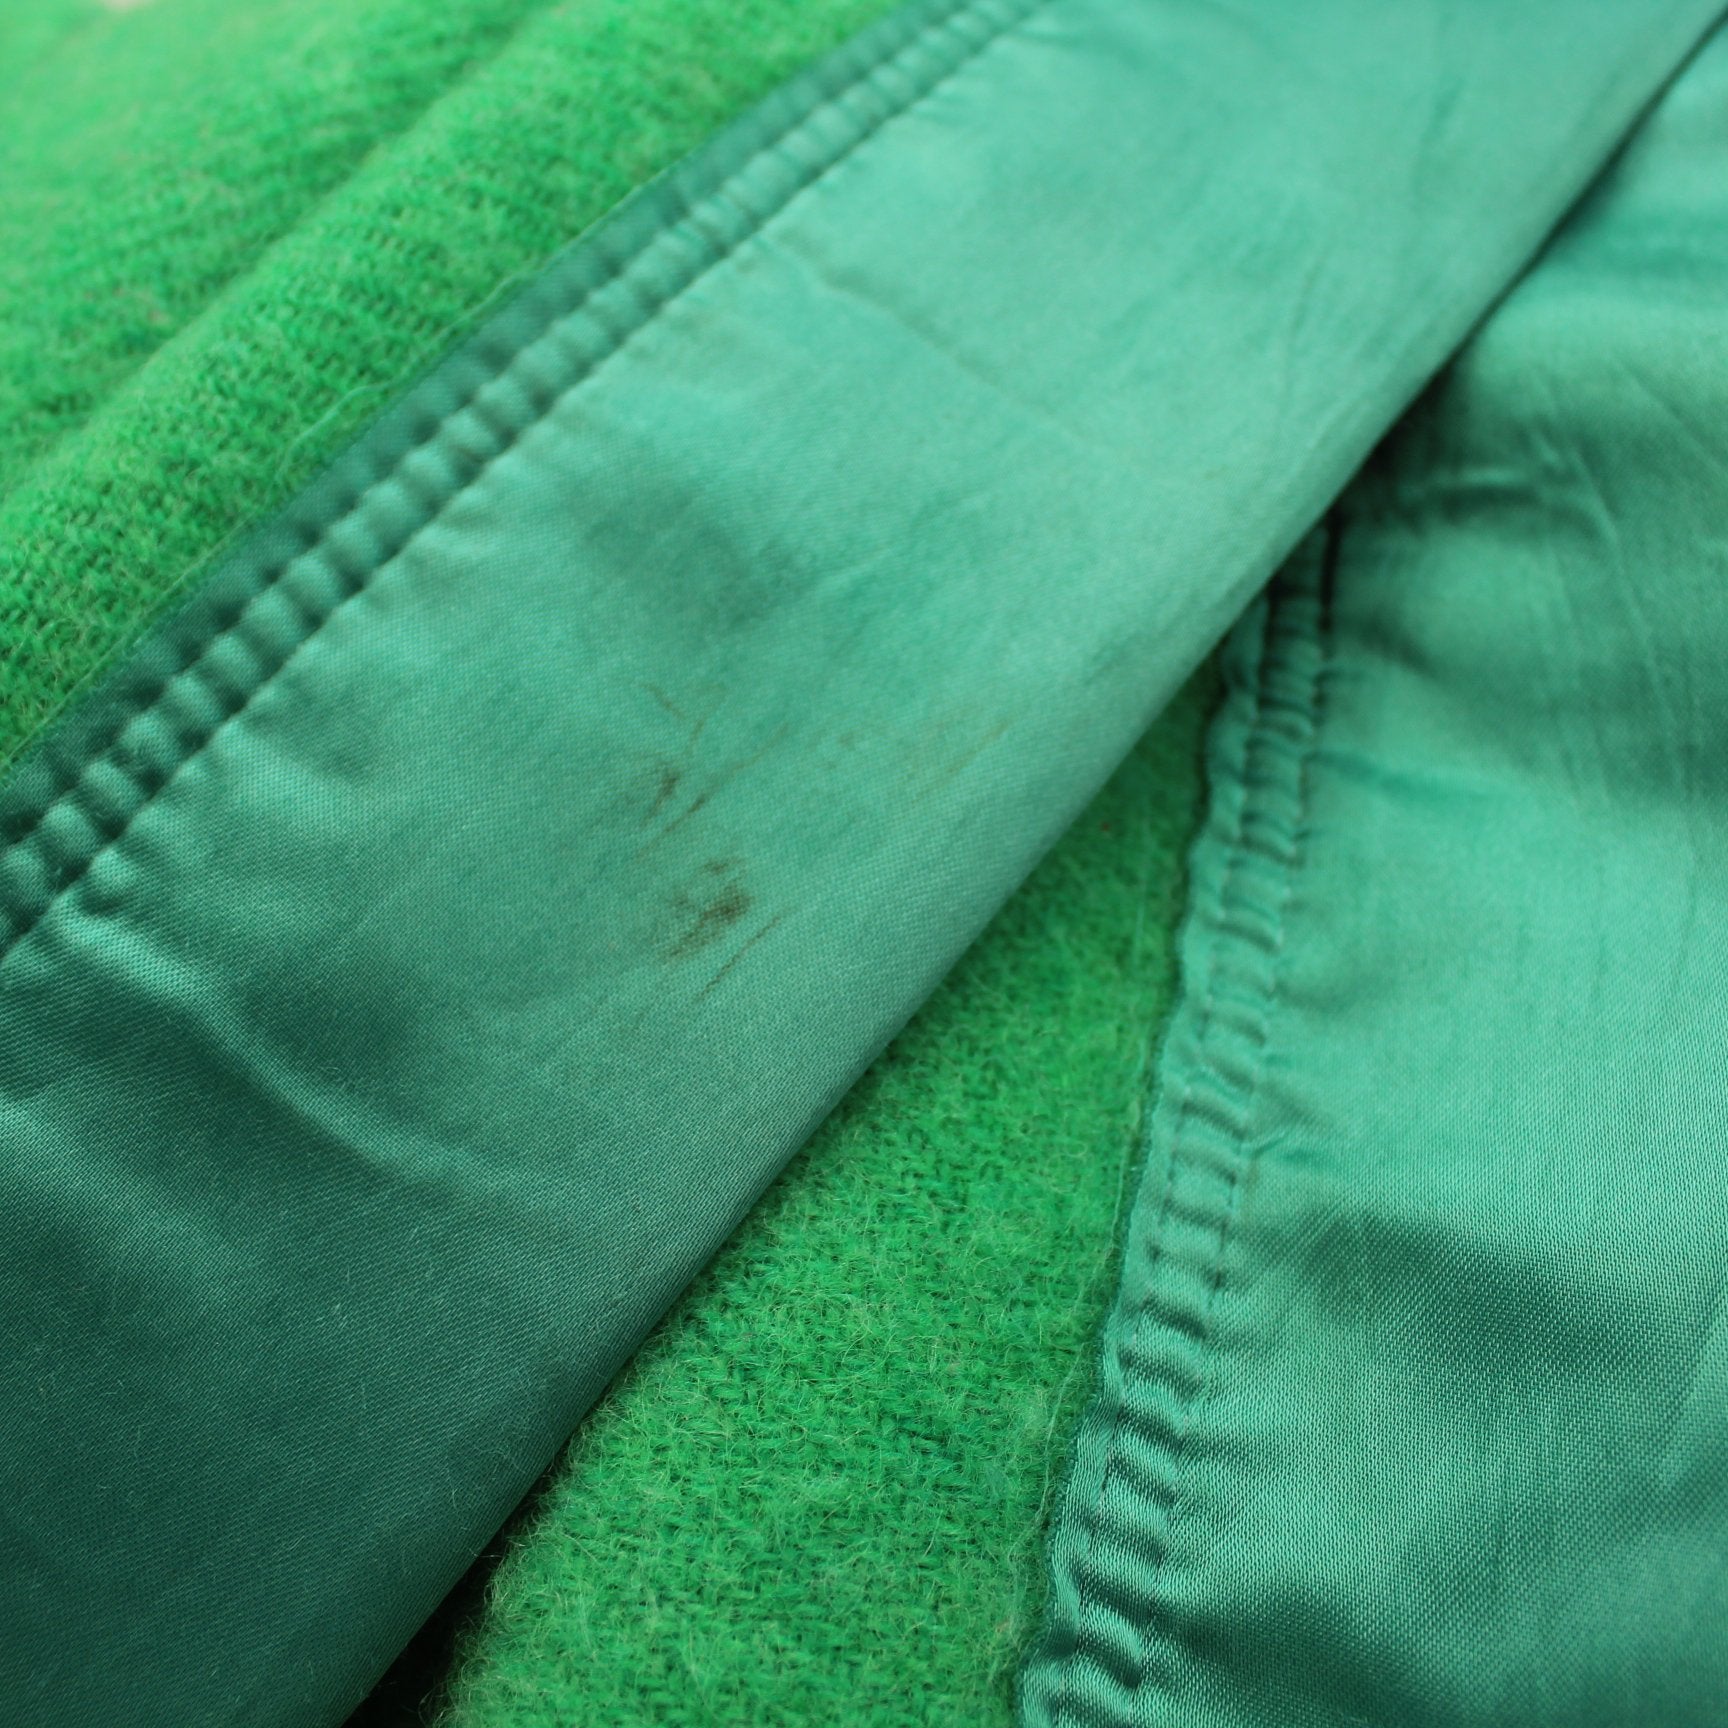 Kenwood Queensize Wool Blanket Green Moth Proof 100" X 87" Canada example stain binding